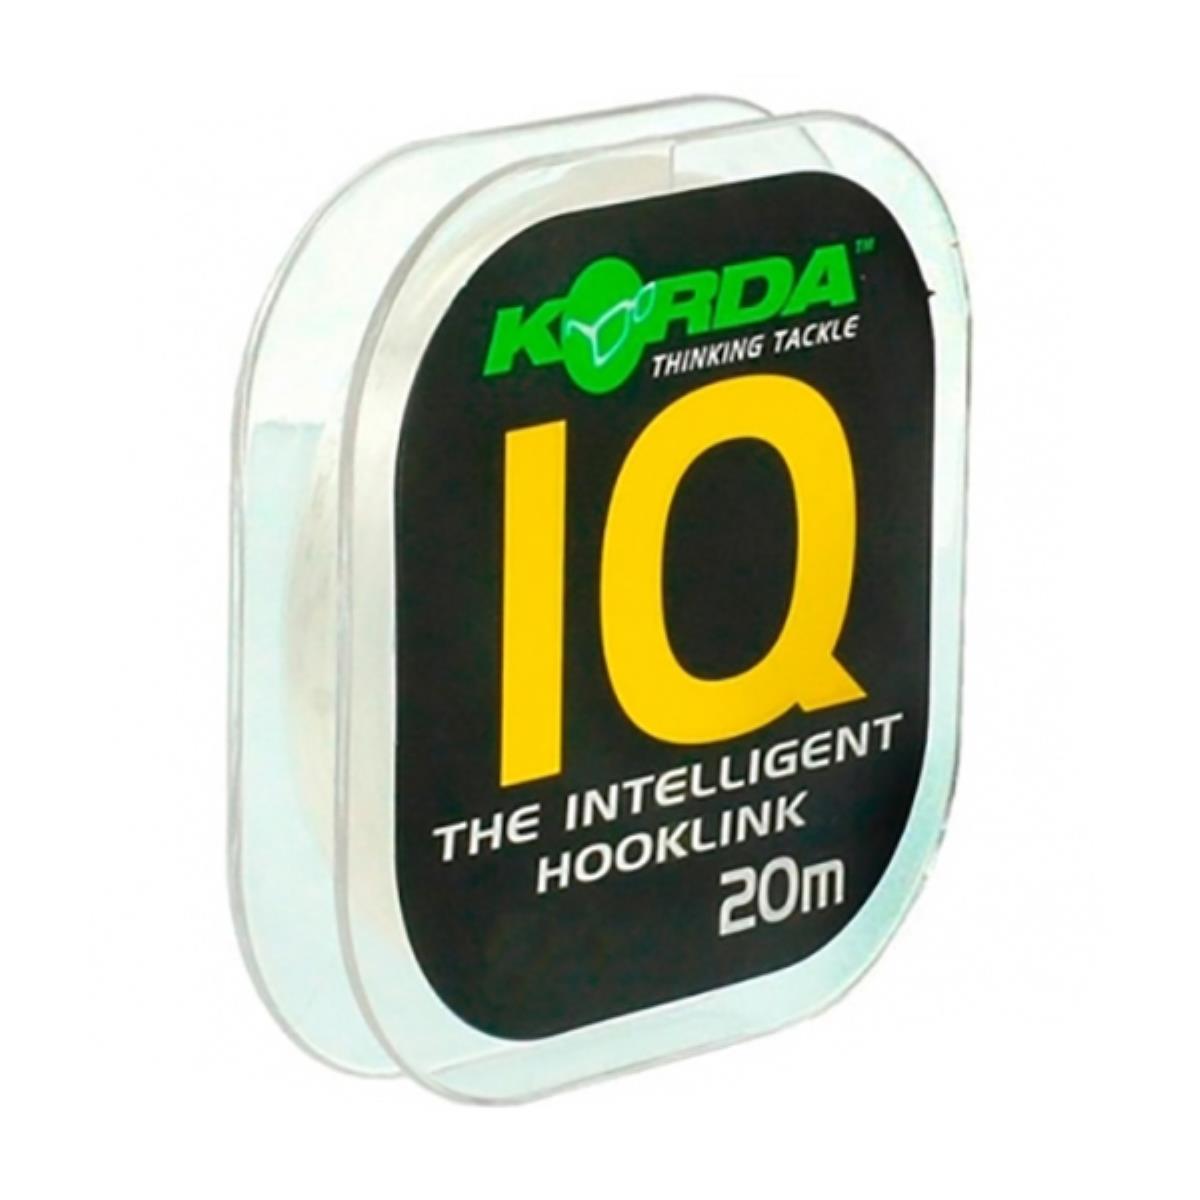 Поводковый материал IQ The Intelligent Hooklink 10 lb Korda intelligent arlight релейный модуль knx 704 sw20 din bus 4x20a arlight